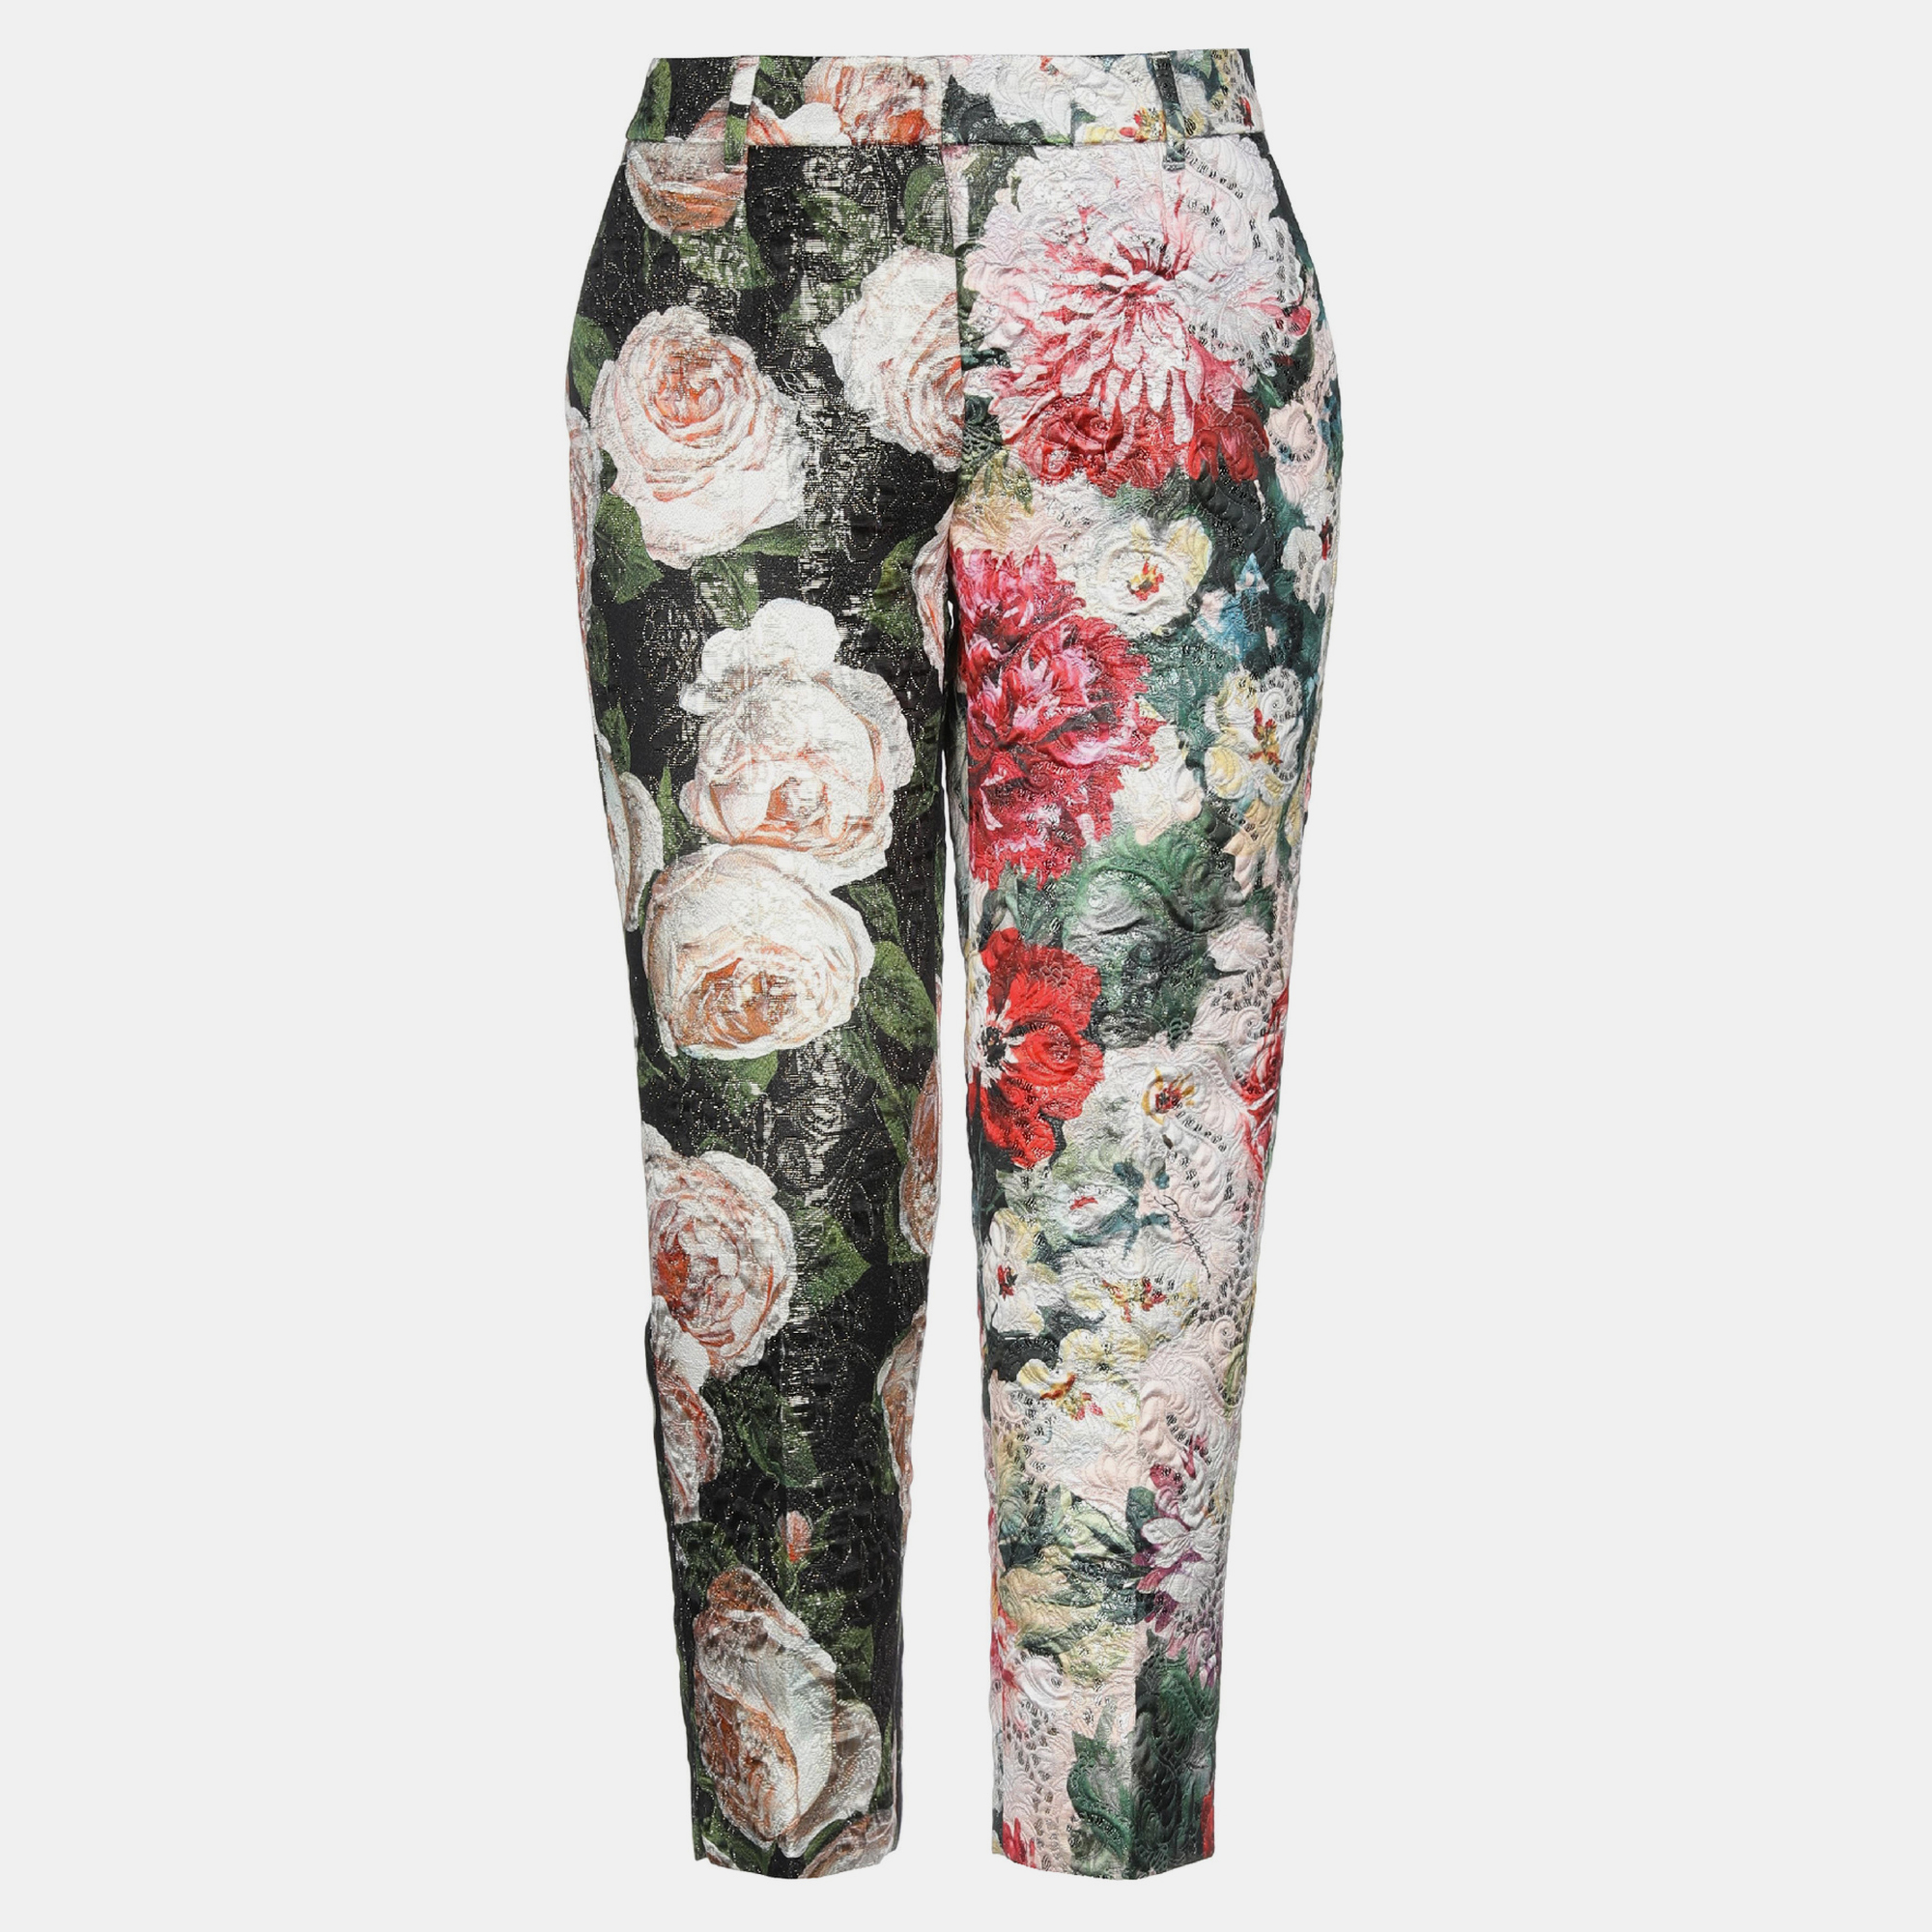 Dolce & gabbana multicolor floral jacquard cropped pants s (it 38)